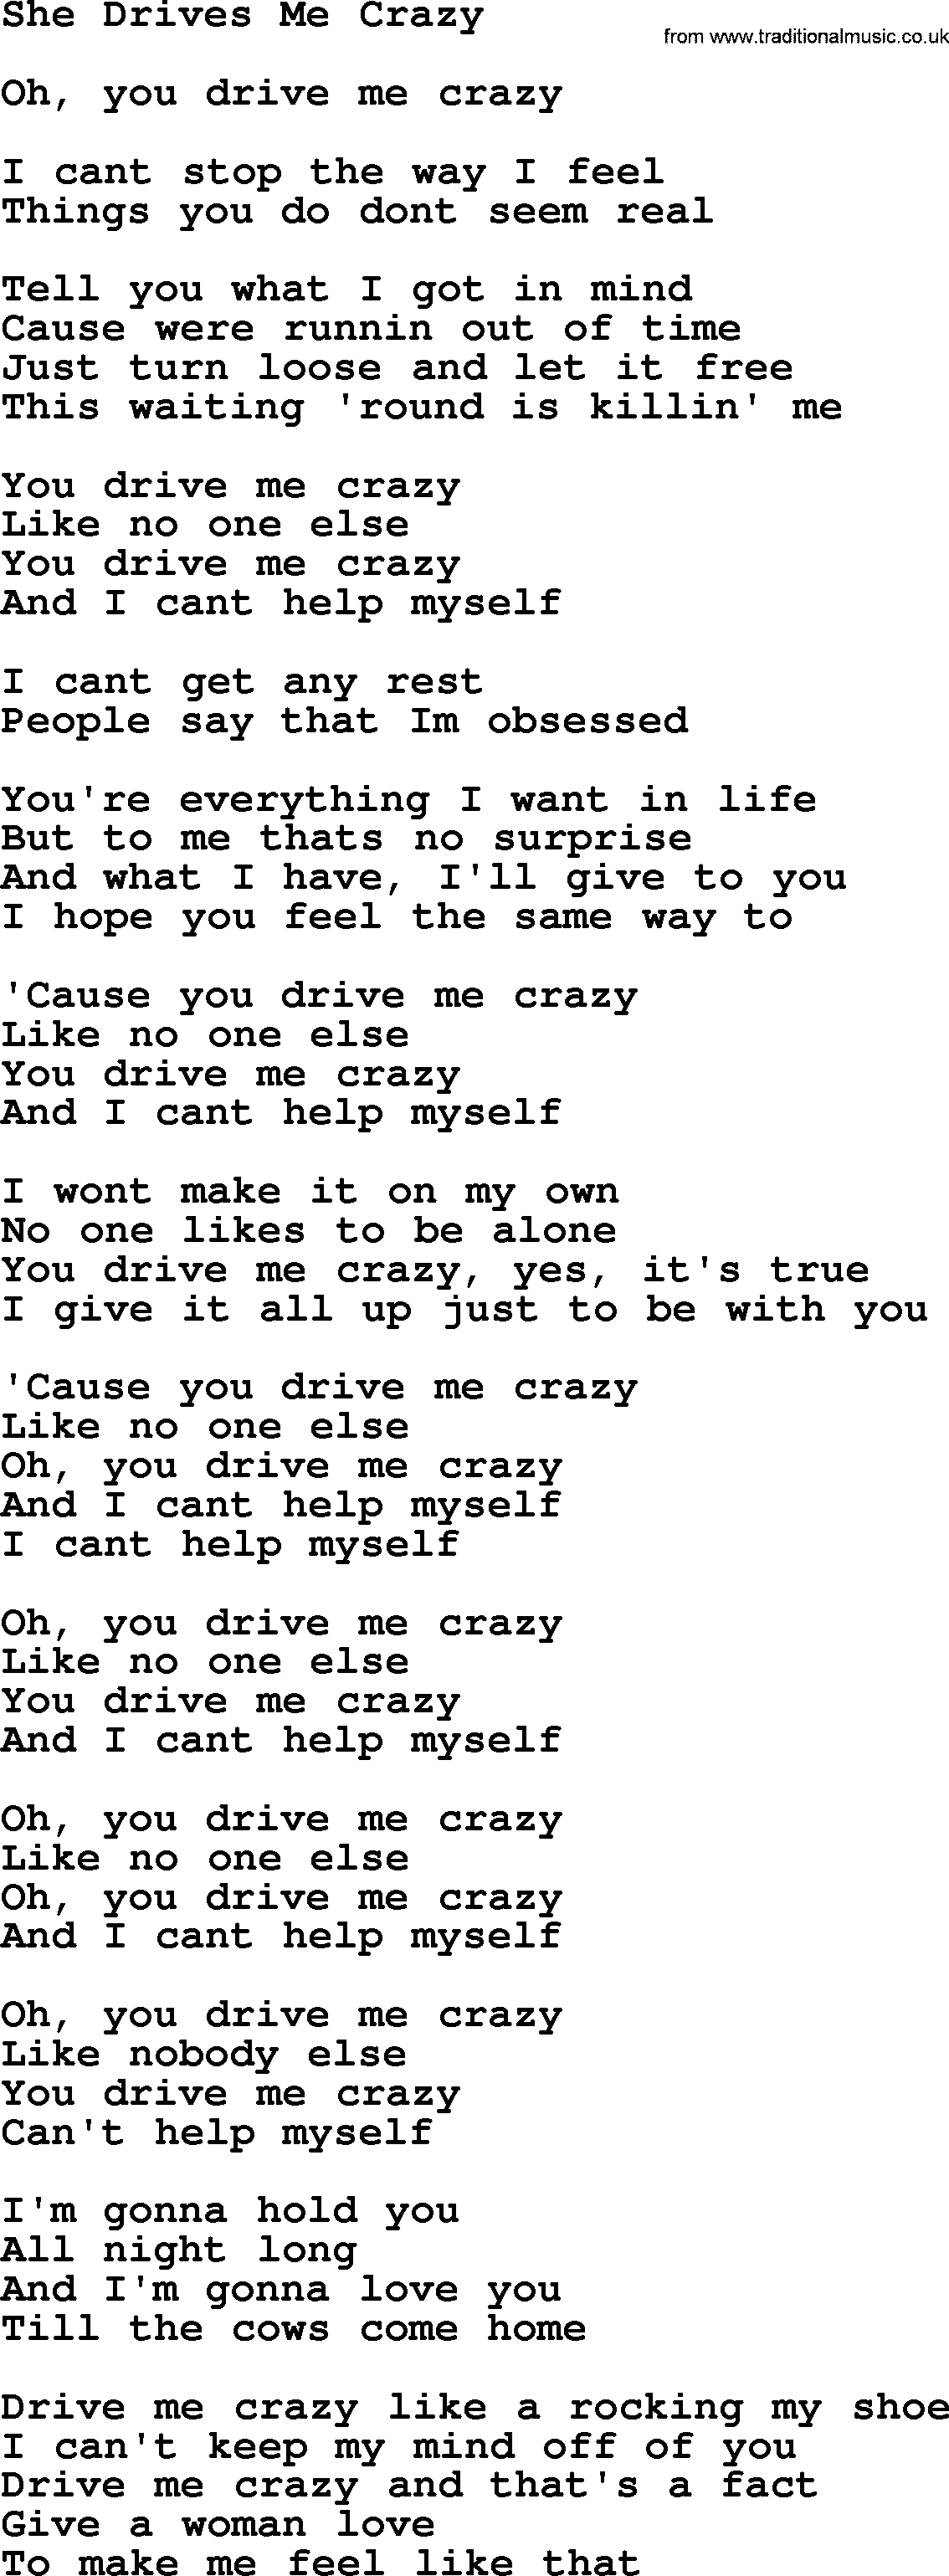 Dolly Parton song She Drives Me Crazy.txt lyrics